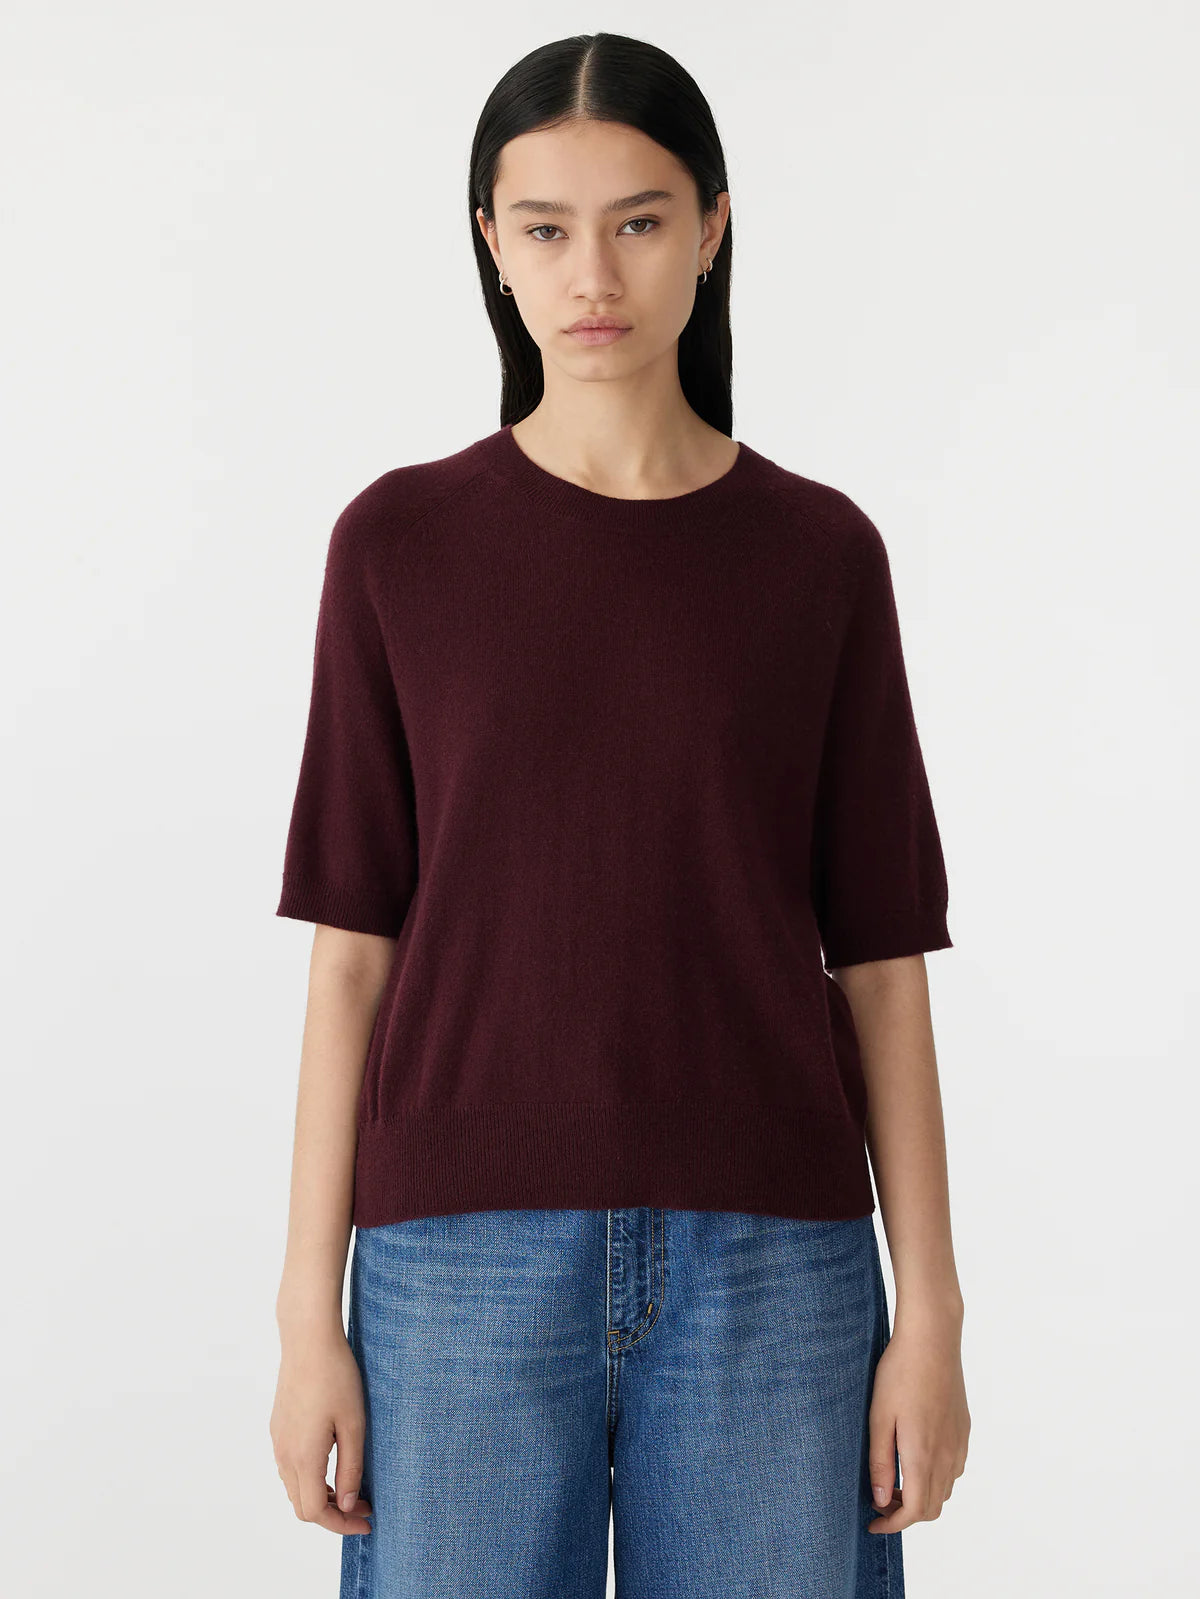 wool cashmere t.shirt knit